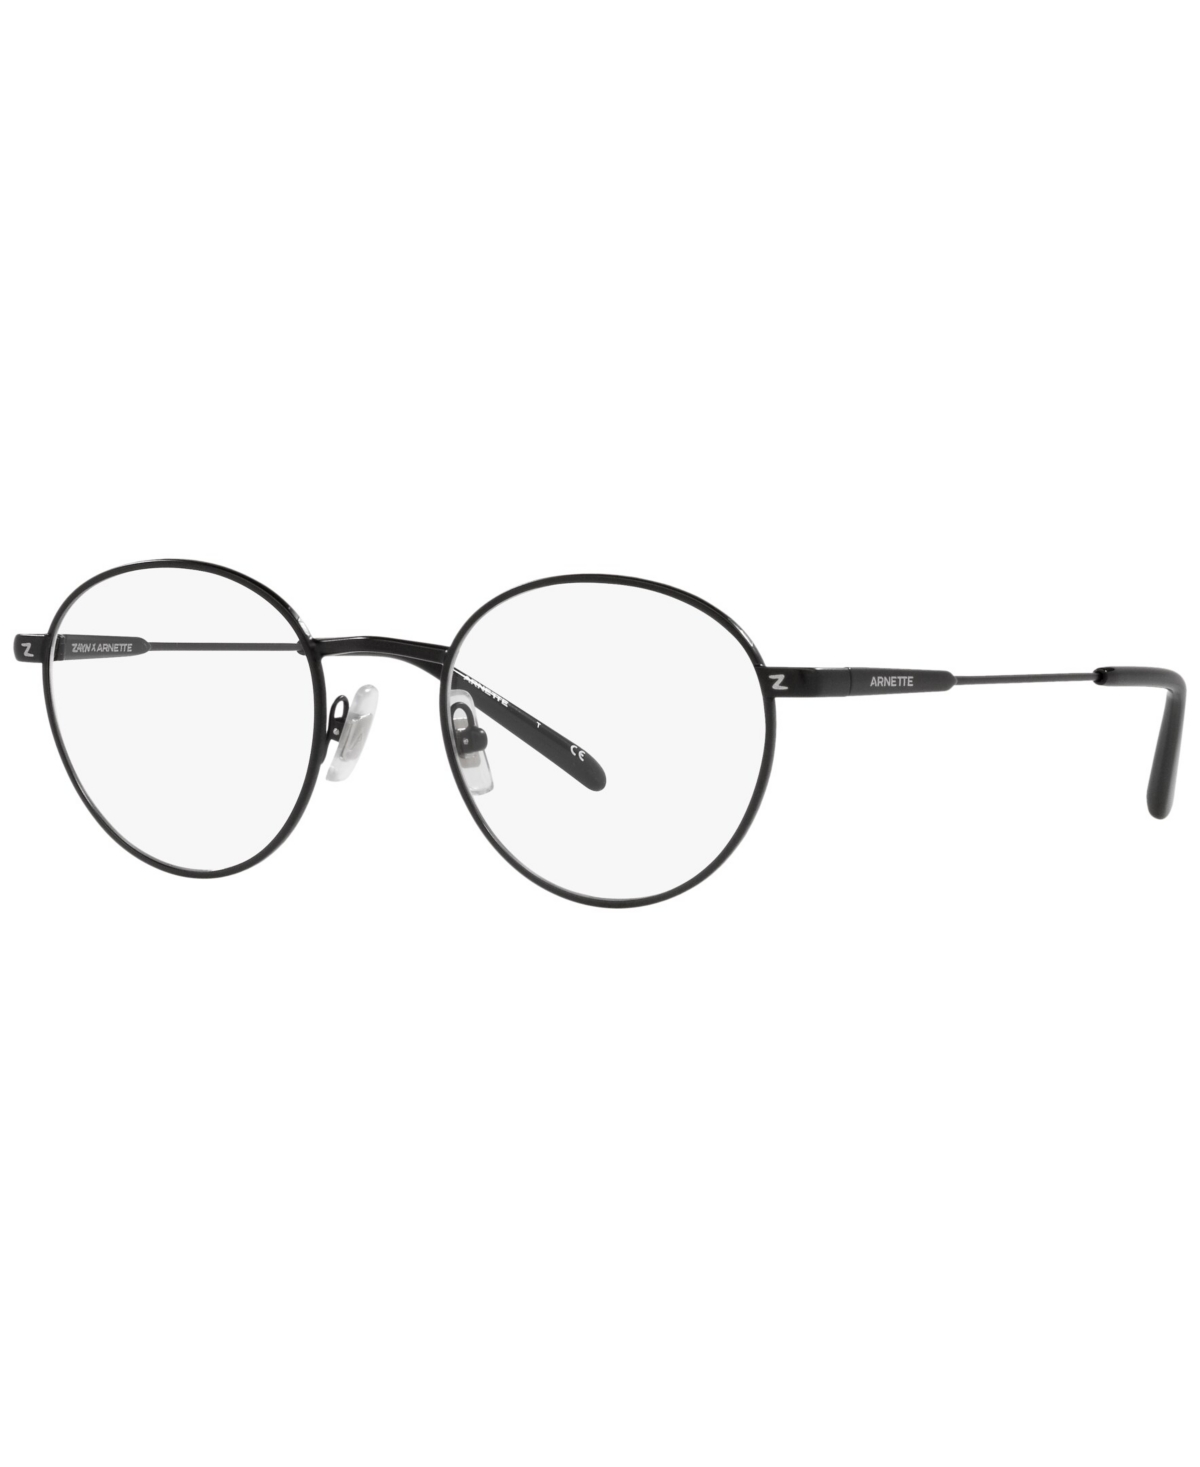 Arnette AN6132 The Professional Men's Phantos Eyeglasses